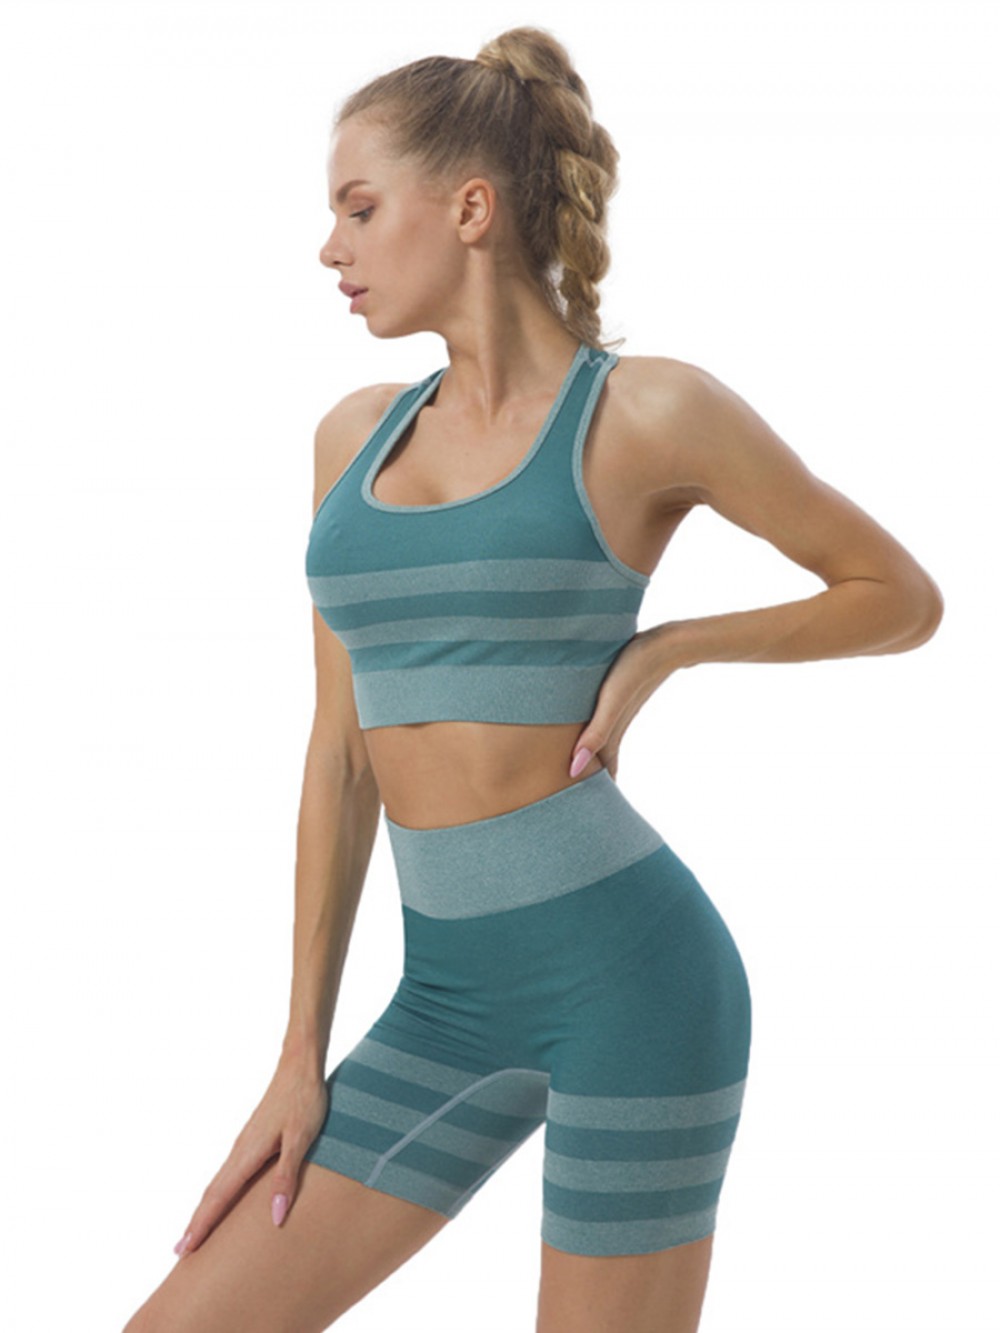 Wholesale Elasticity Knit Sport Jogging Wear Fitness Yoga Short Set